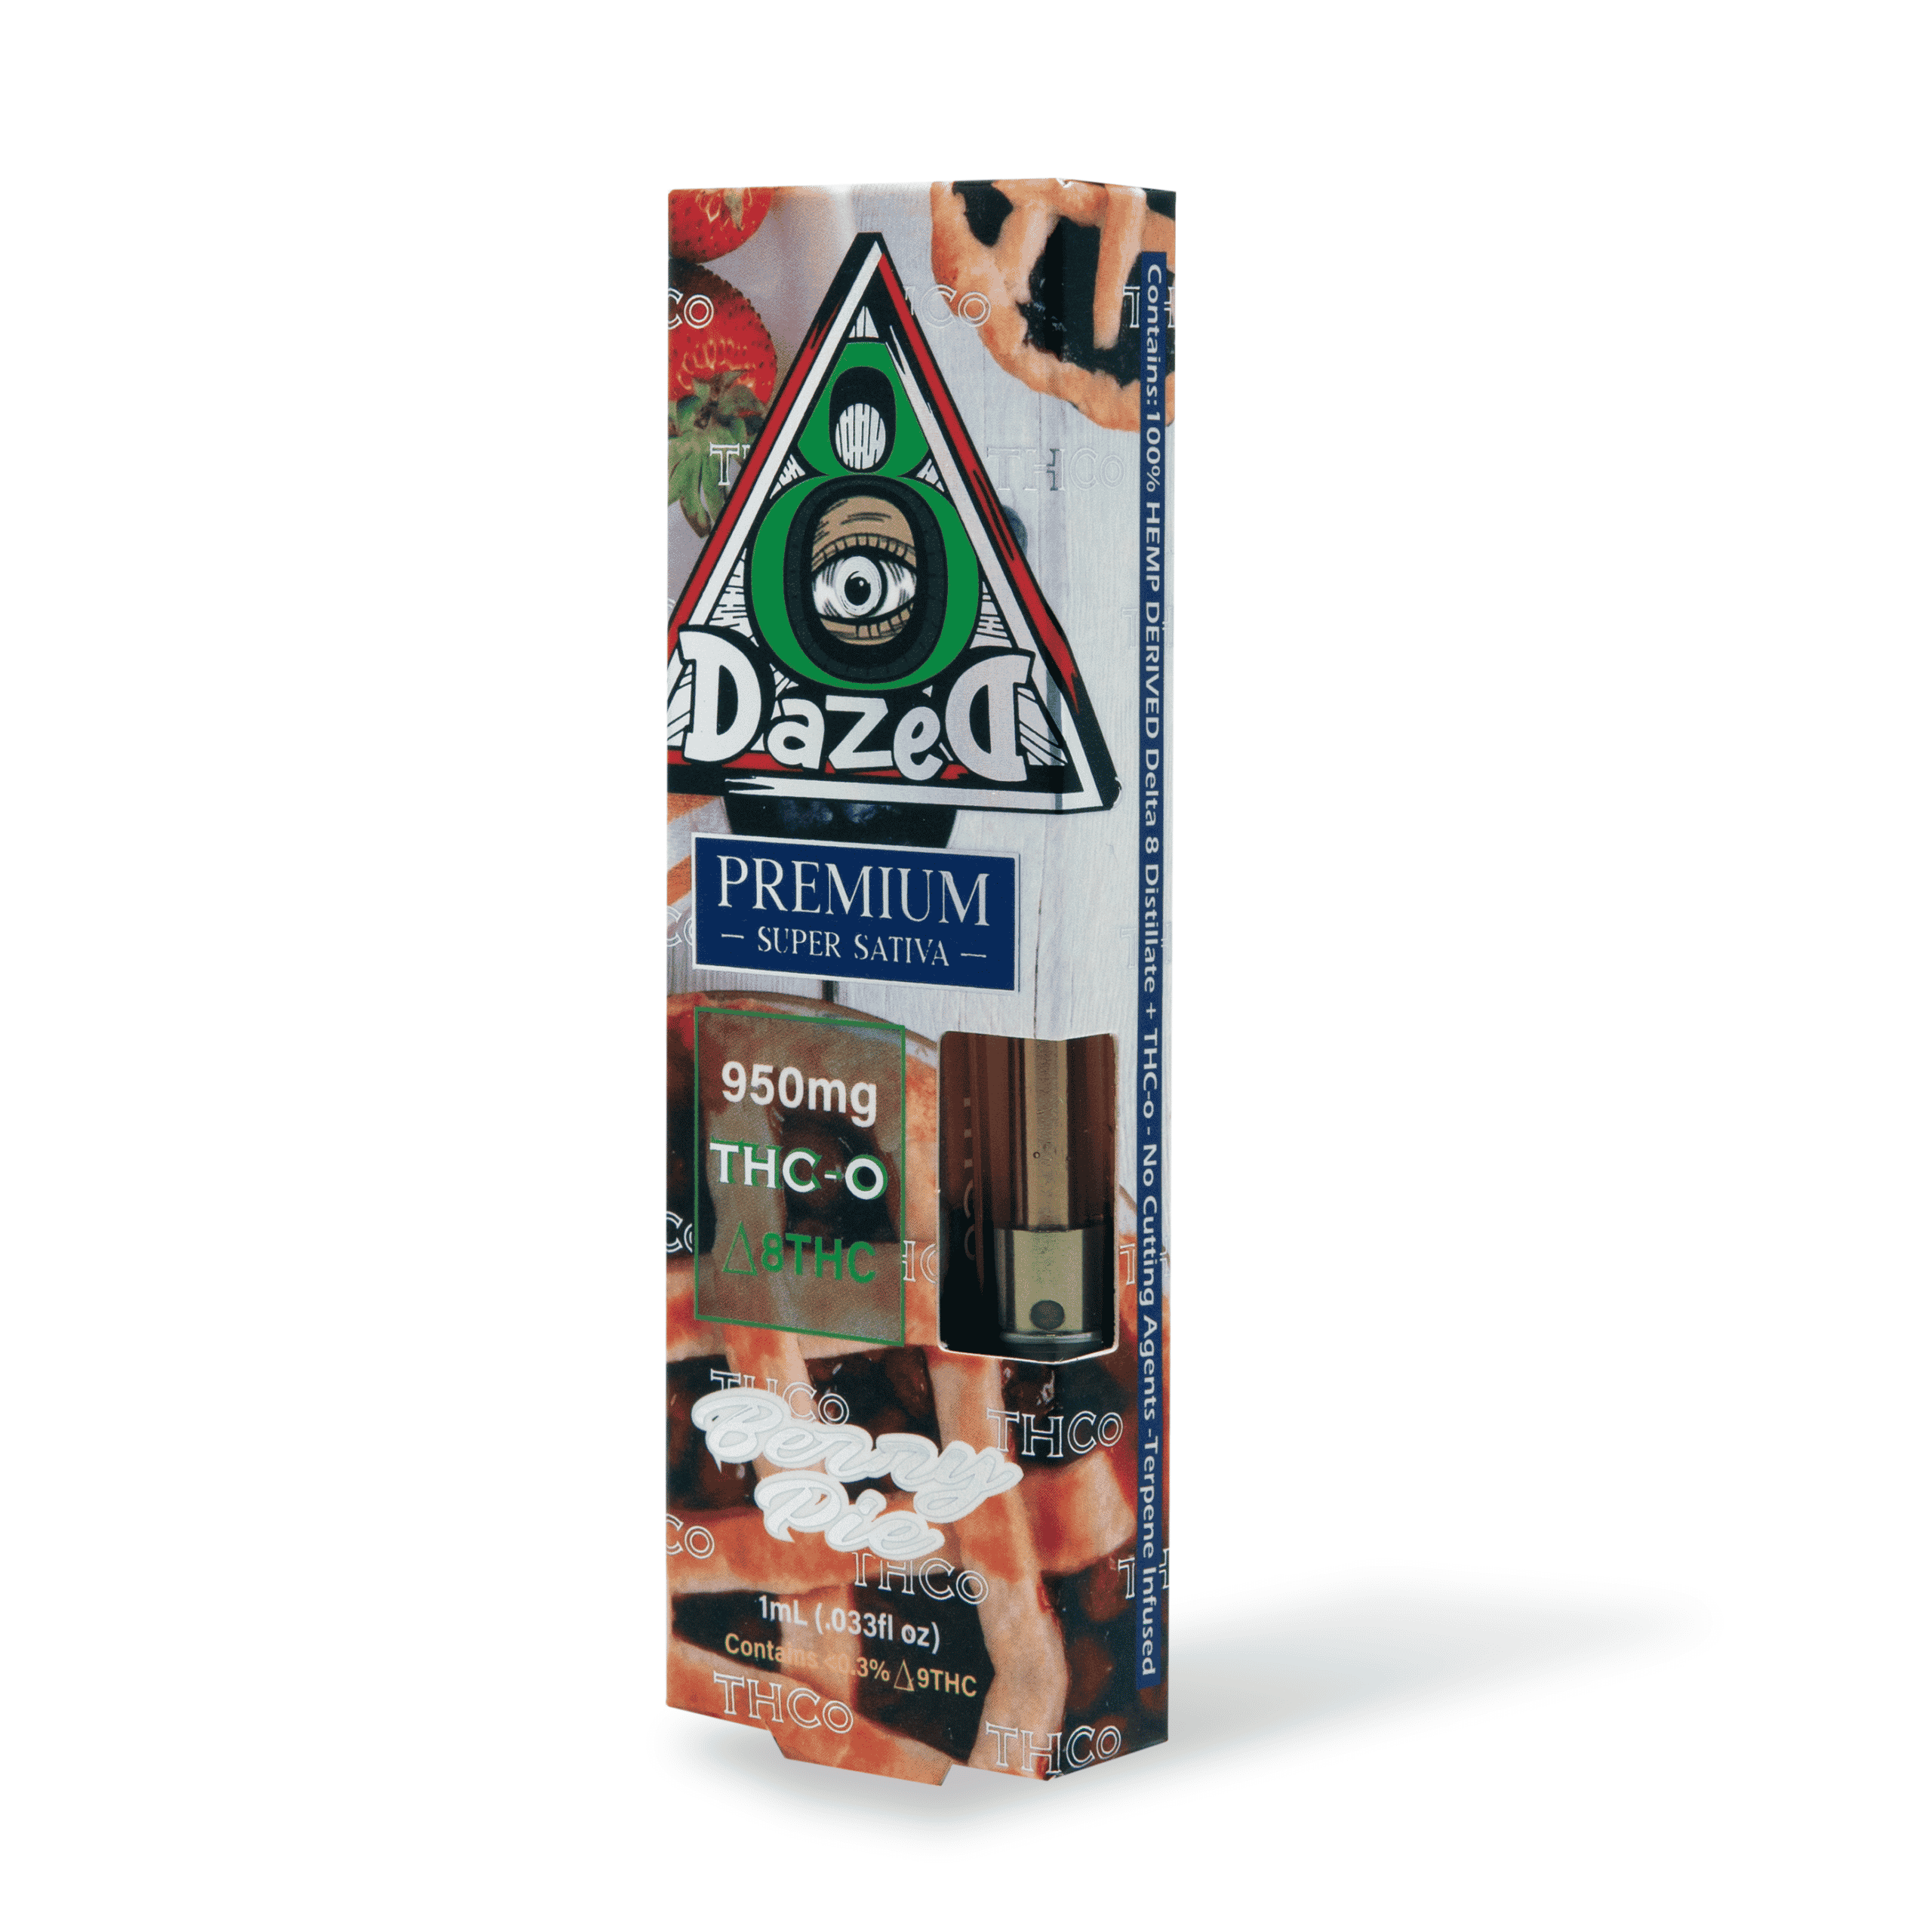 DazeD8 Berry Pie Delta 8 THC-O Cartridge (1g) Best Price